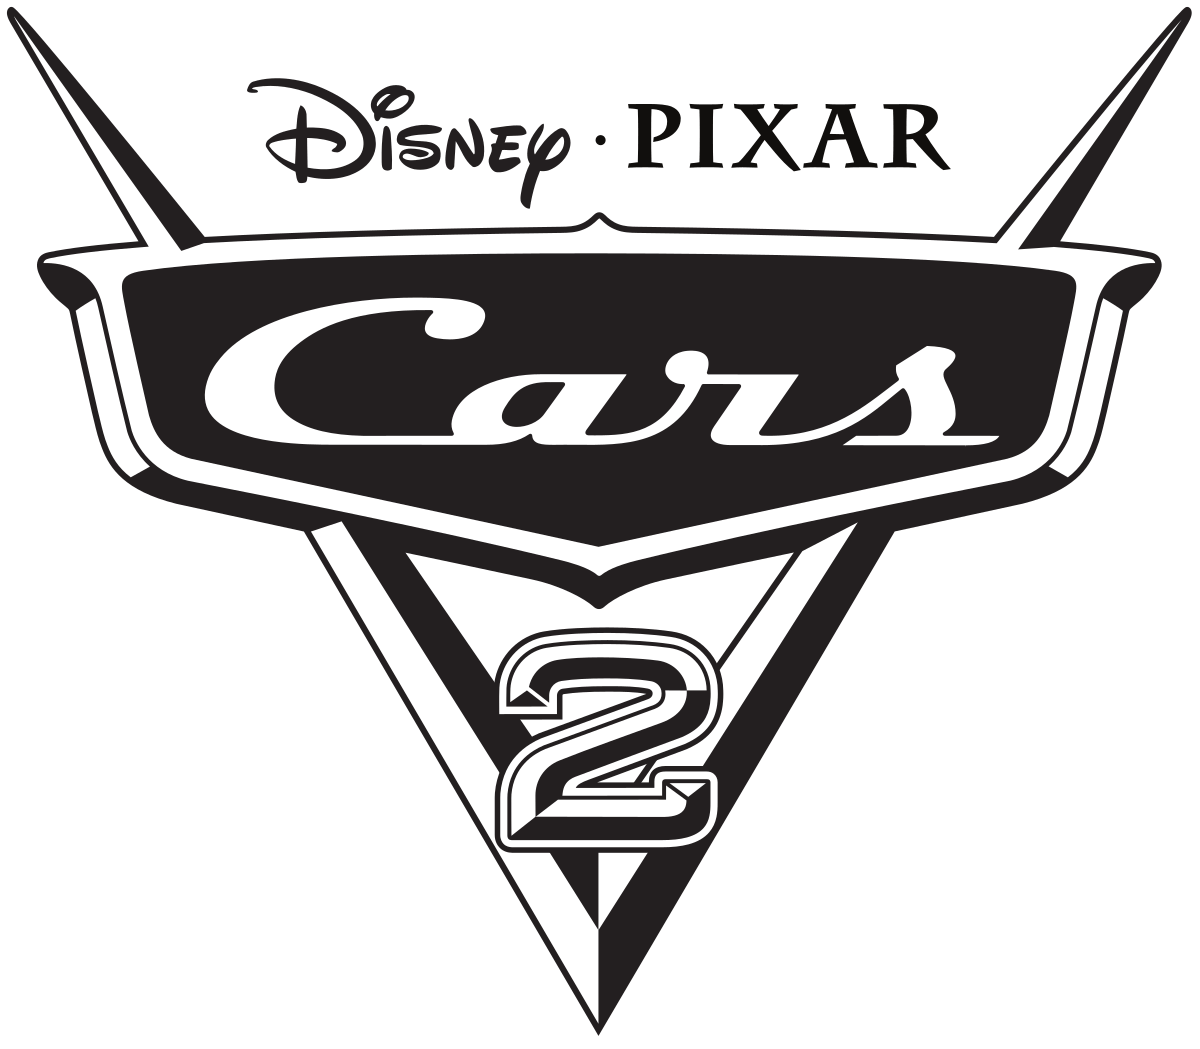 Disney Pixar Cars 2 Logo - Pixar Cars 2 Logo Png Images